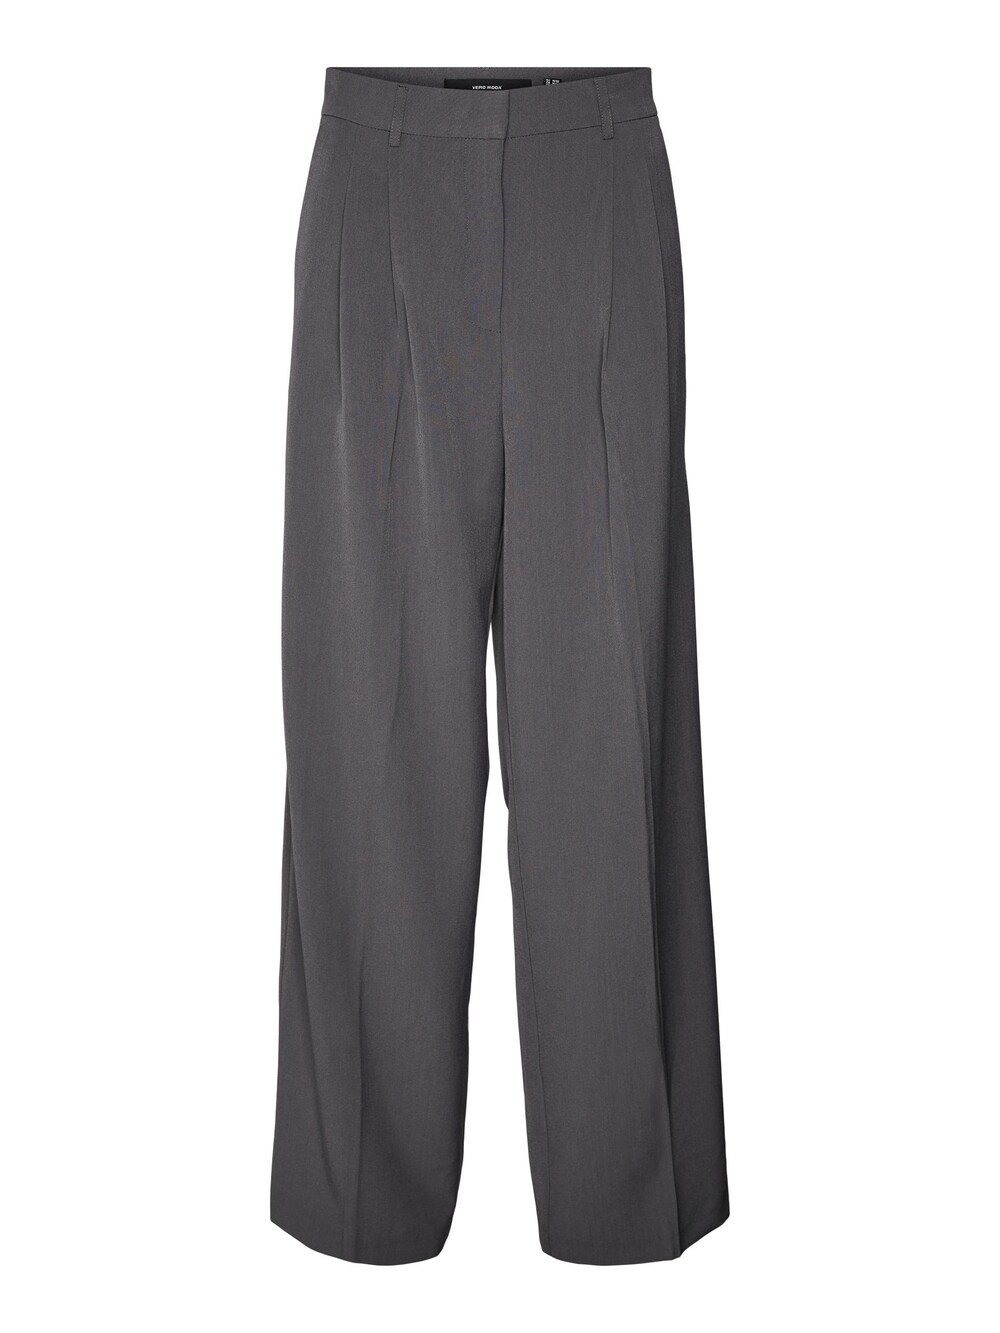 Широкие брюки со складками спереди Vero Moda TROIAN, серый